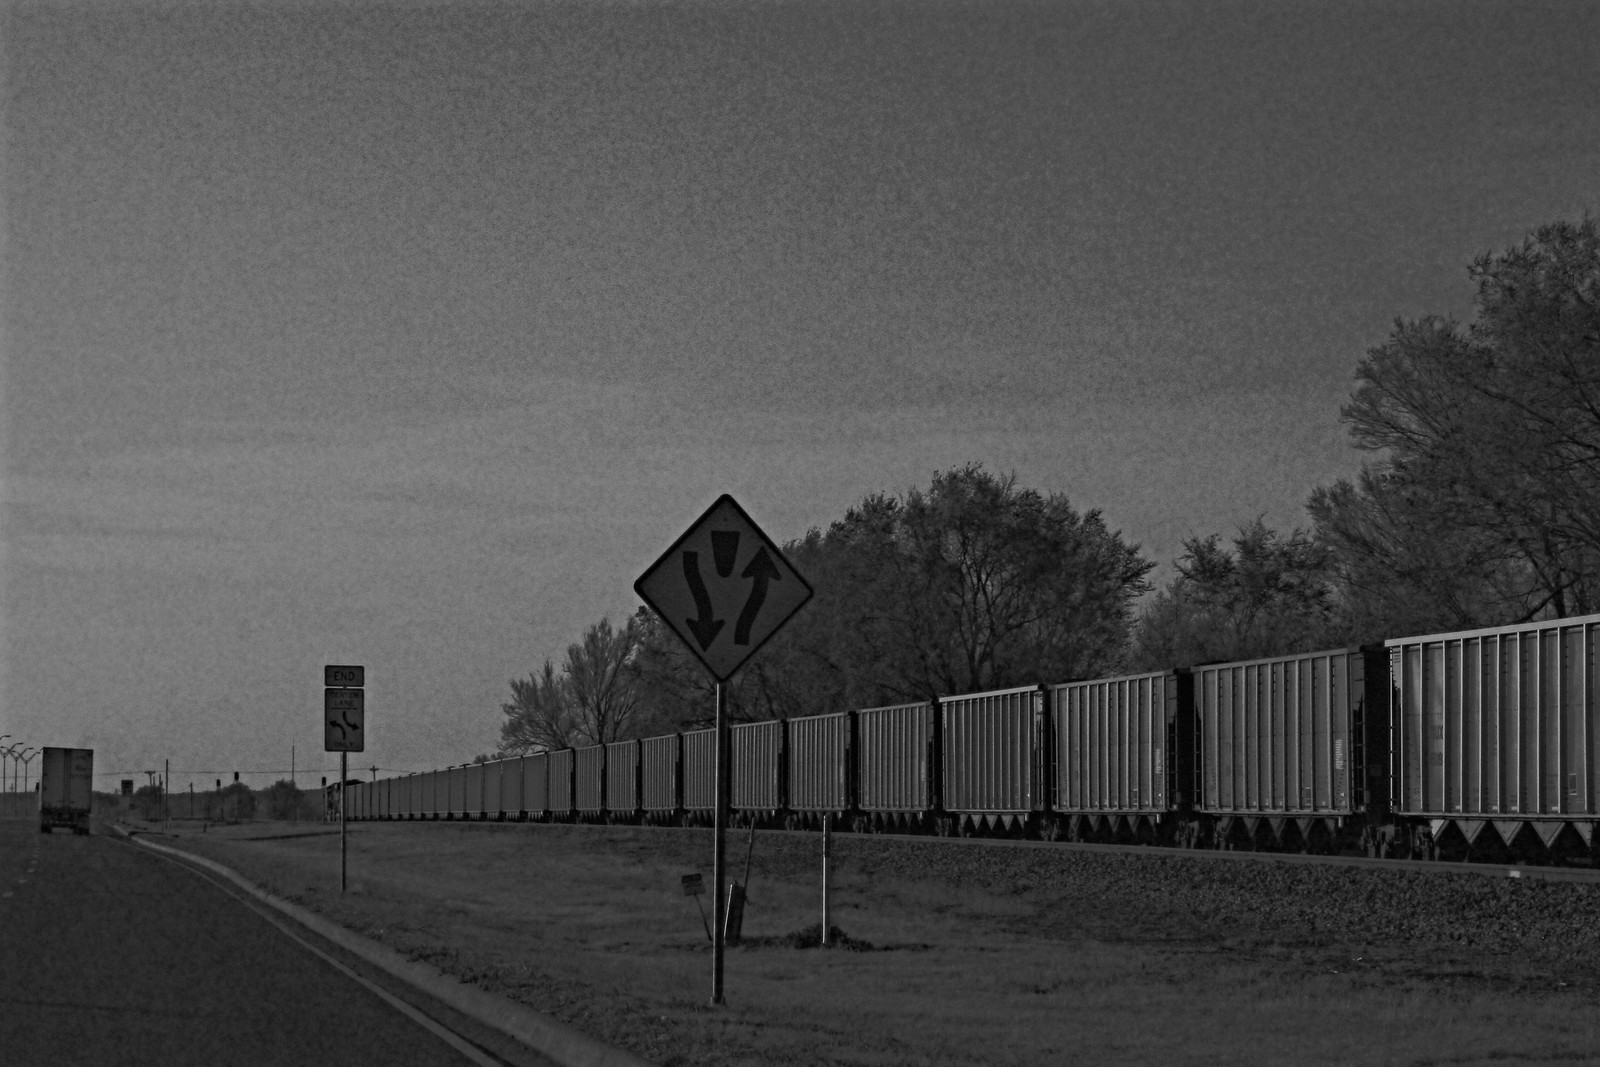 Train Cars, Memphis, Texas, 2008, Processed 2021